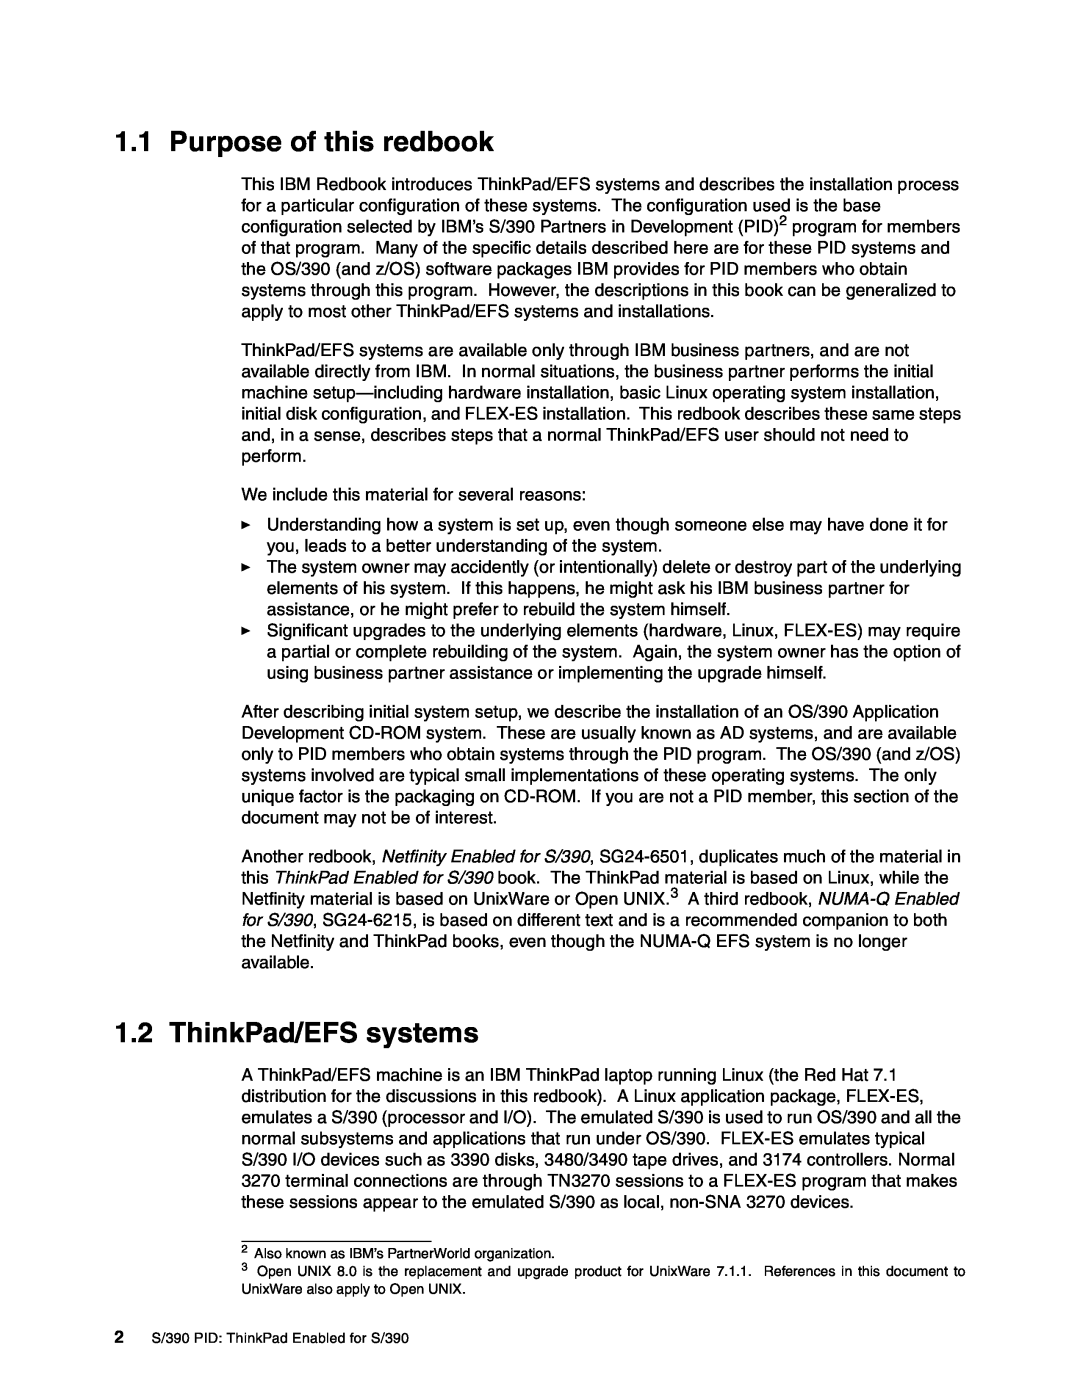 IBM s/390 manual Purpose of this redbook, ThinkPad/EFS systems 